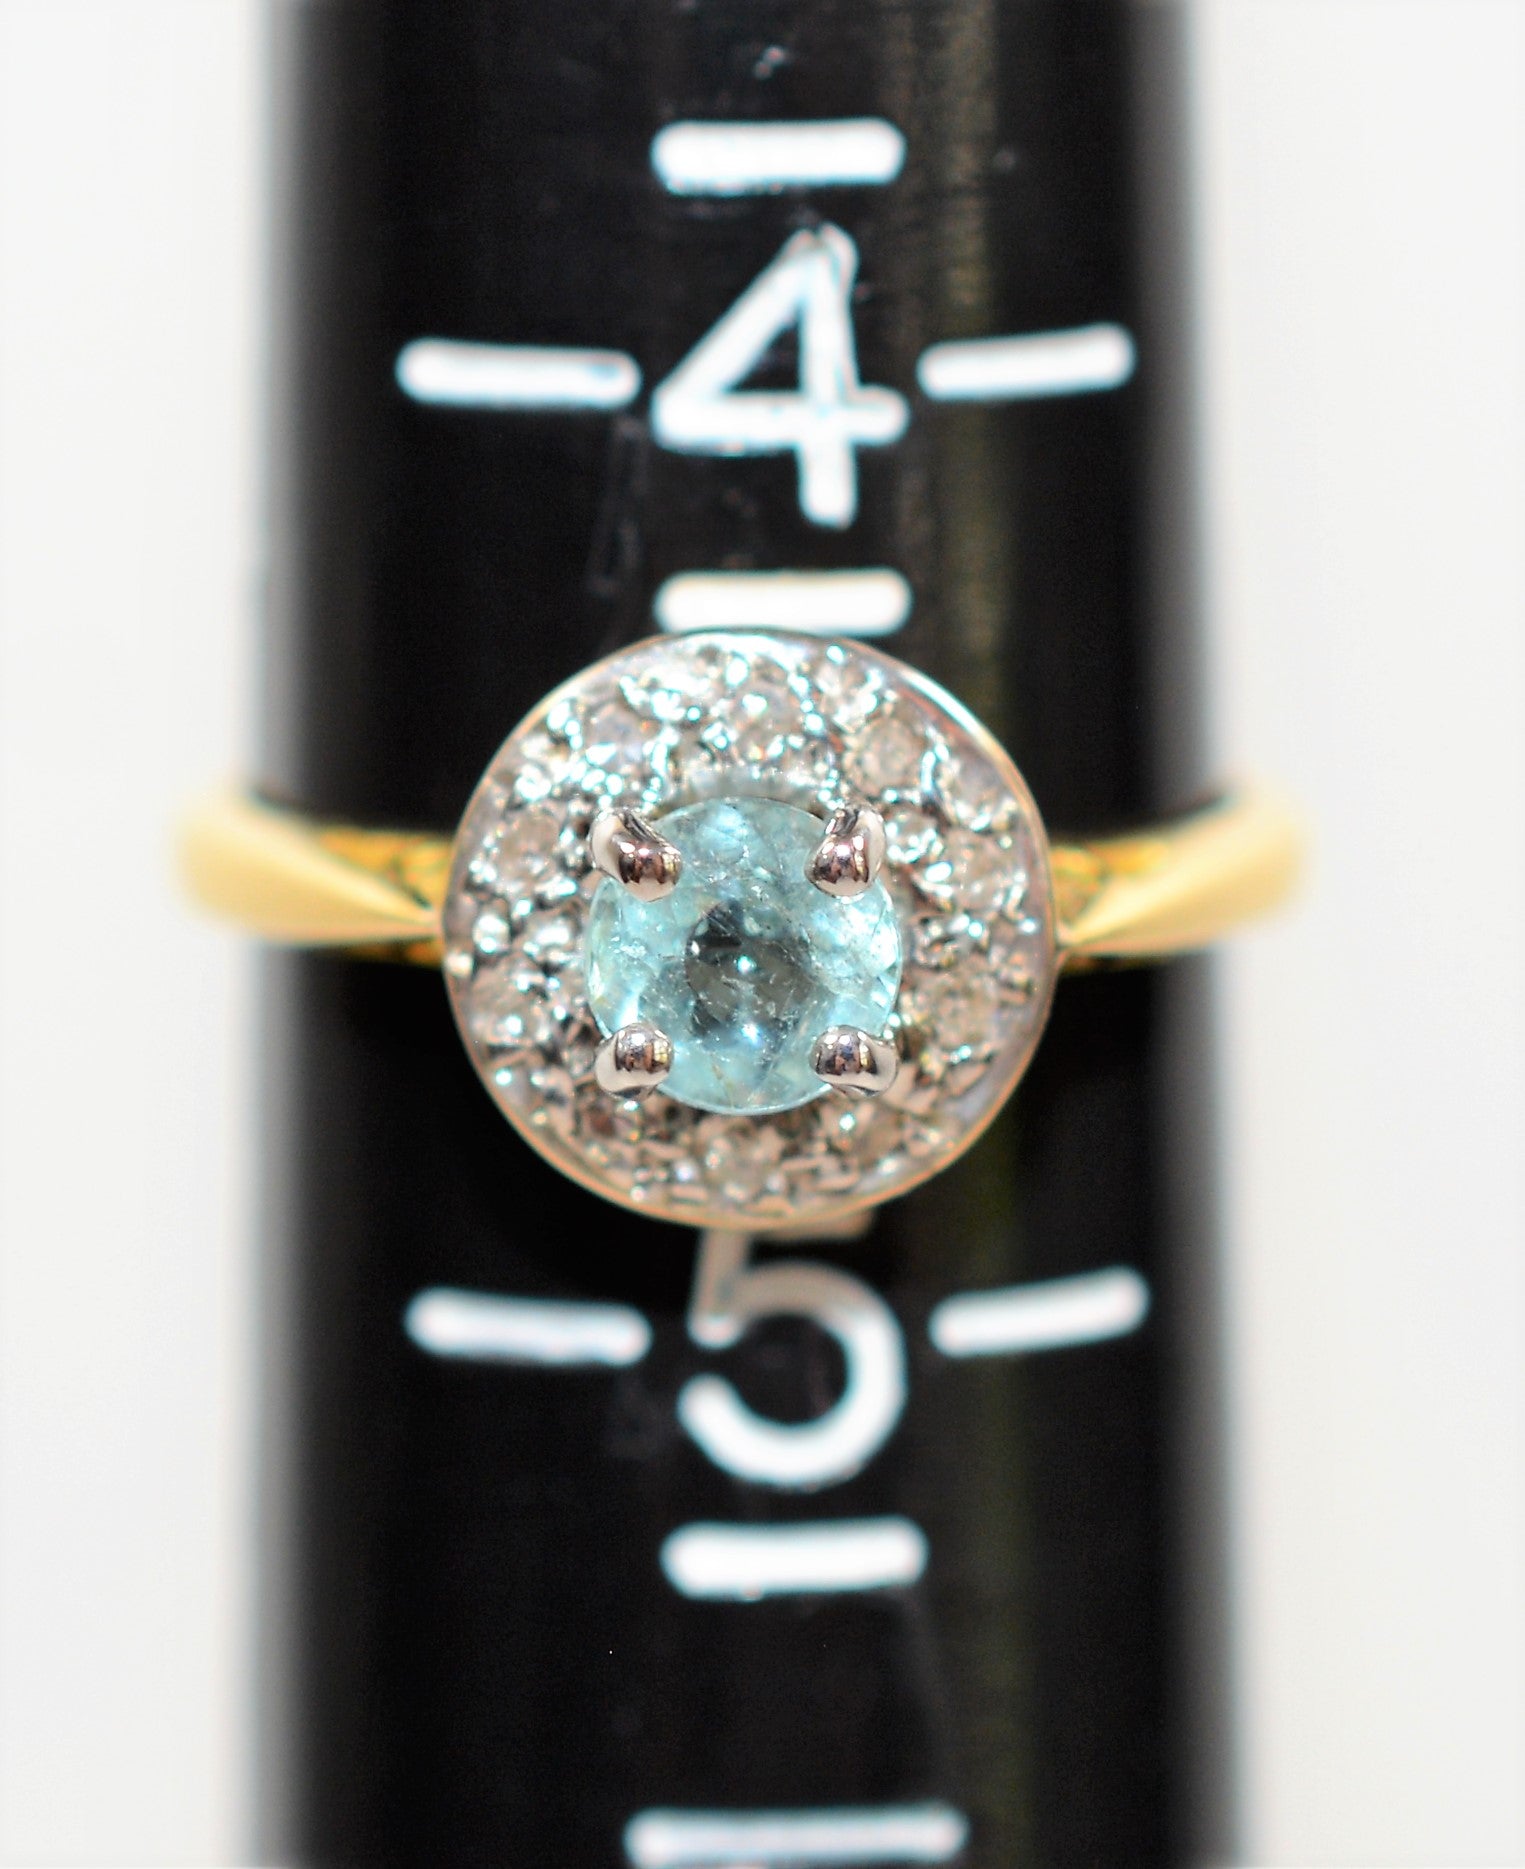 Natural Paraiba Tourmaline & Diamond Ring 18K Solid Gold .60tcw Gemstone Fine Halo Women’s Ring Ladies Ring Engagement Ring Estate Jewelry